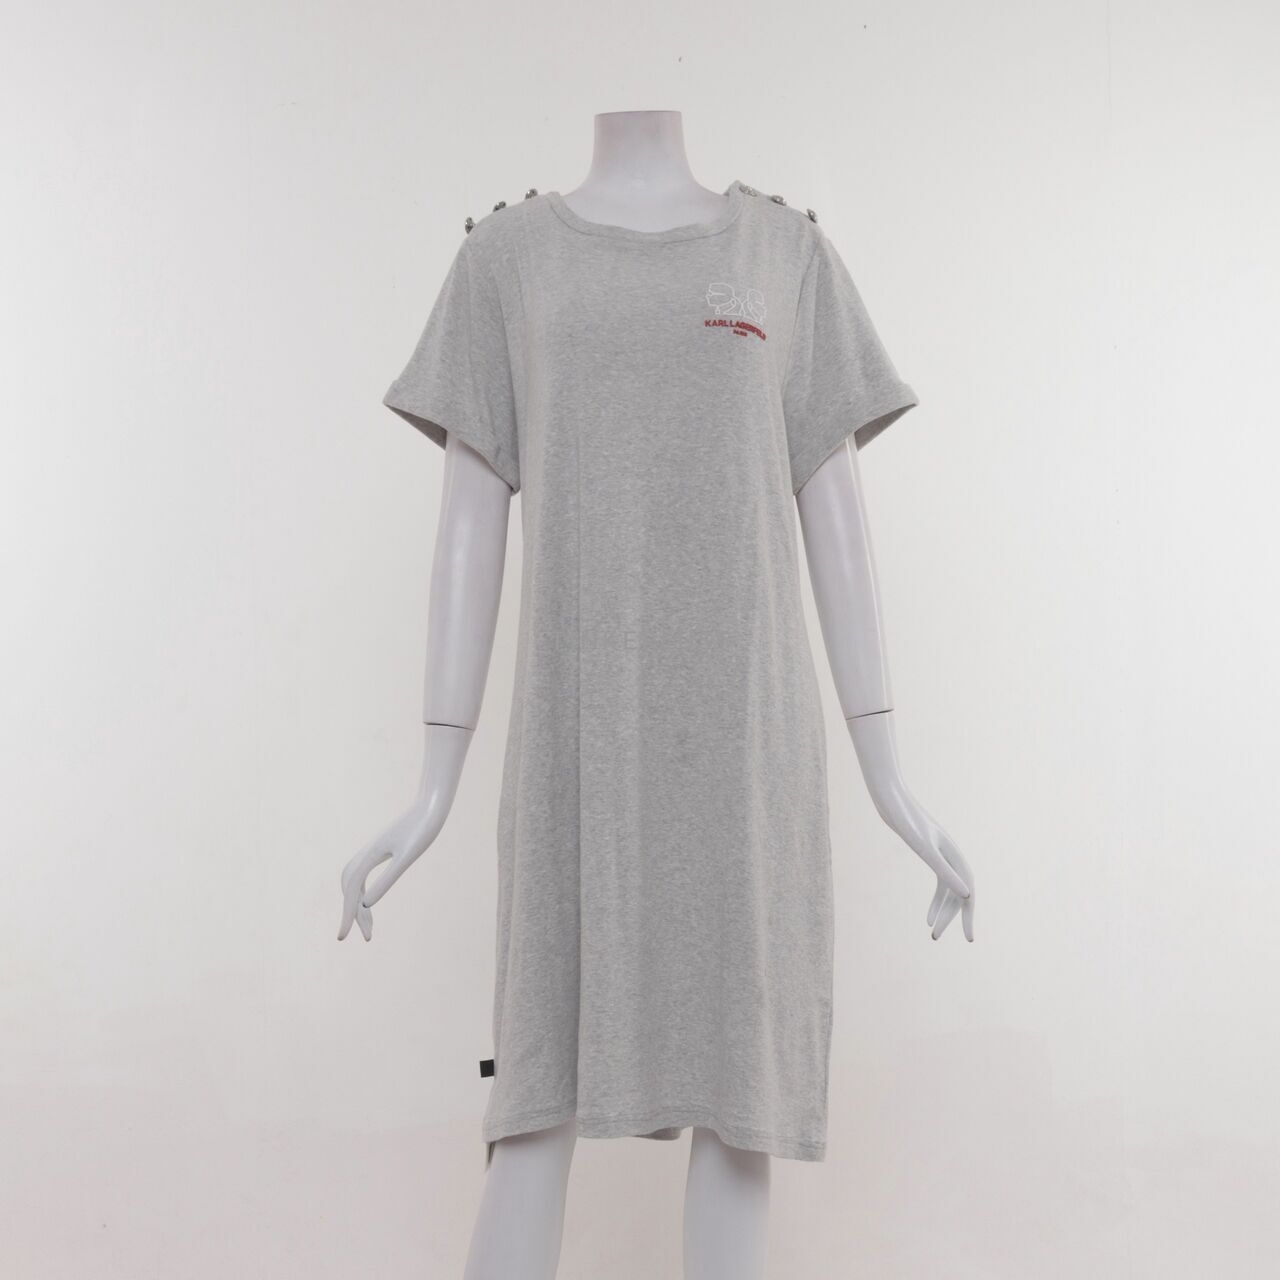 Karl Lagerfeld Gray Button Shoulder Tshirt dress